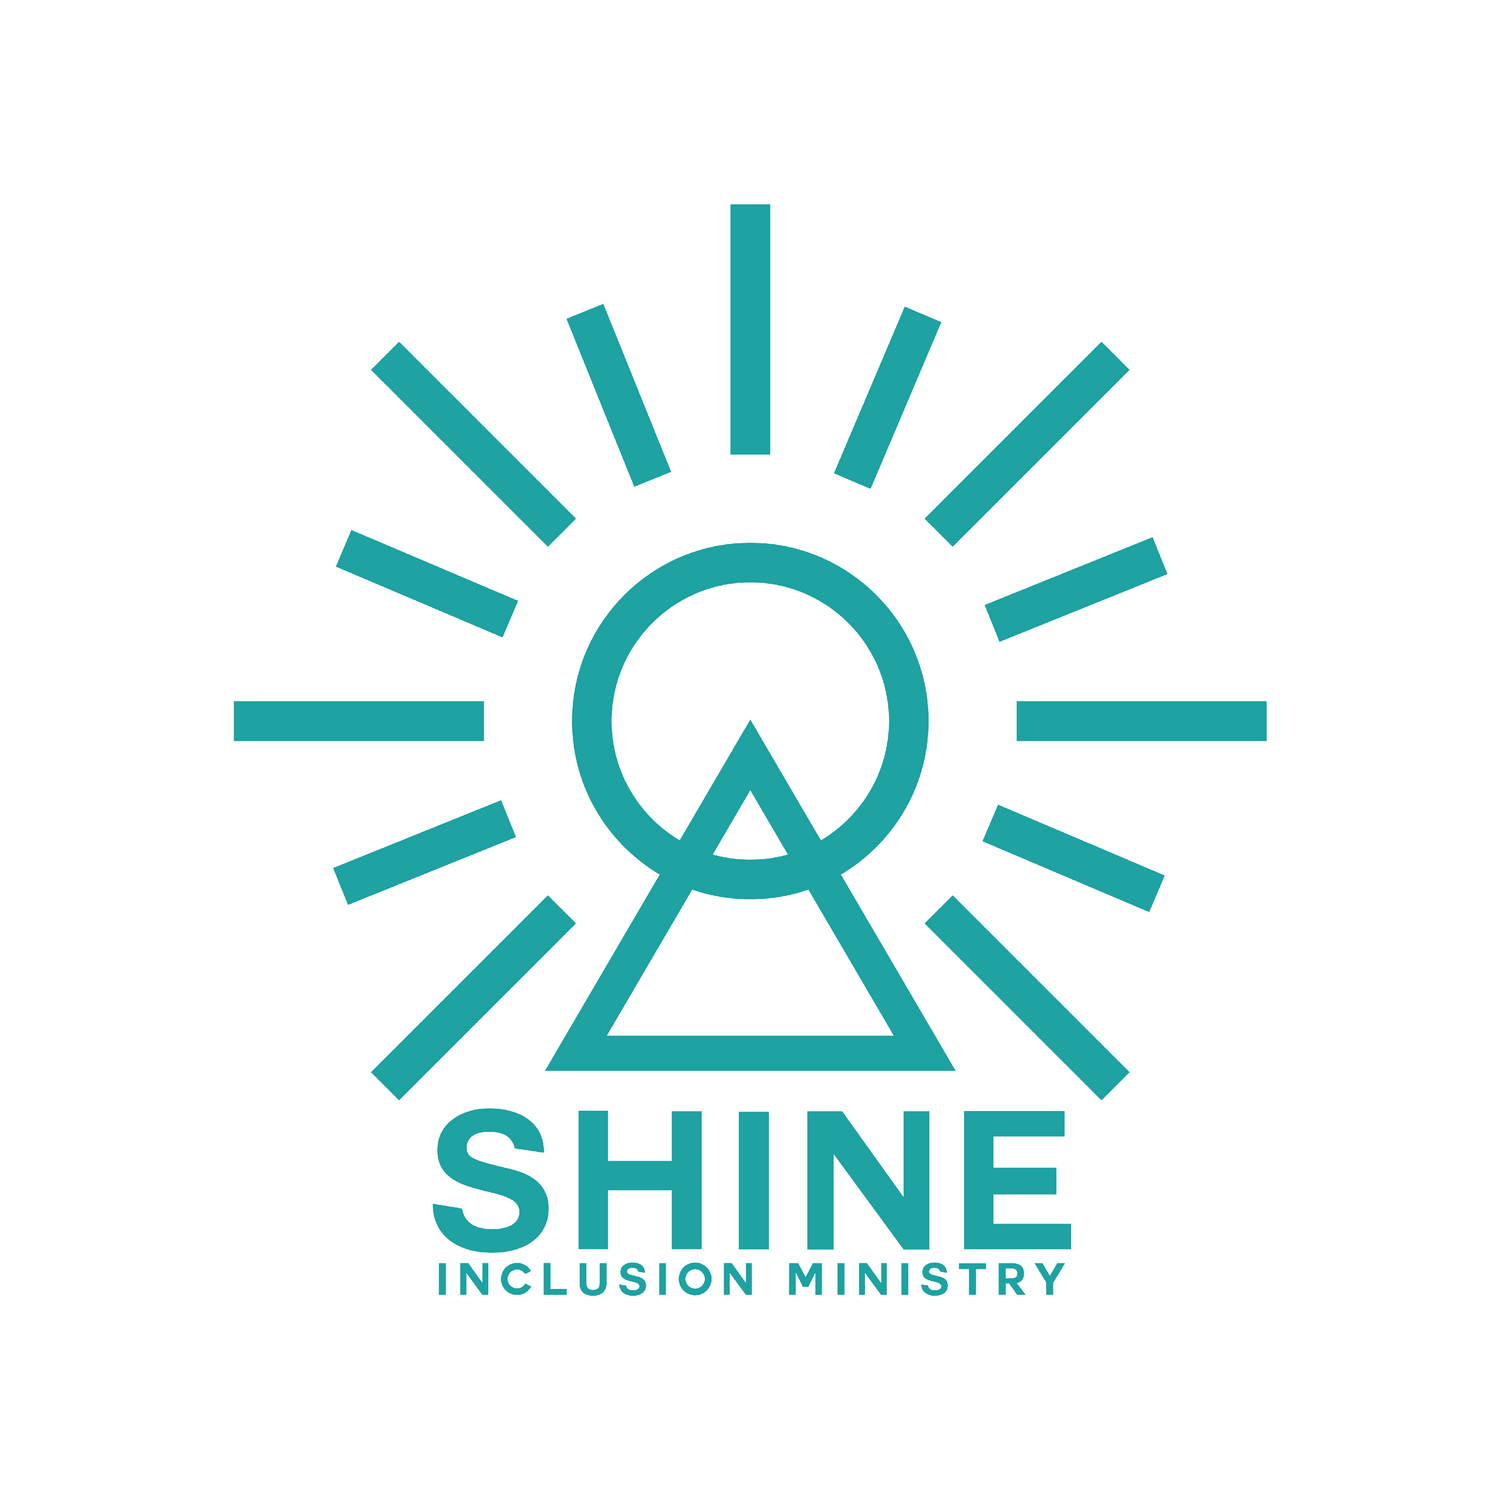 Shine inclusion Ministry